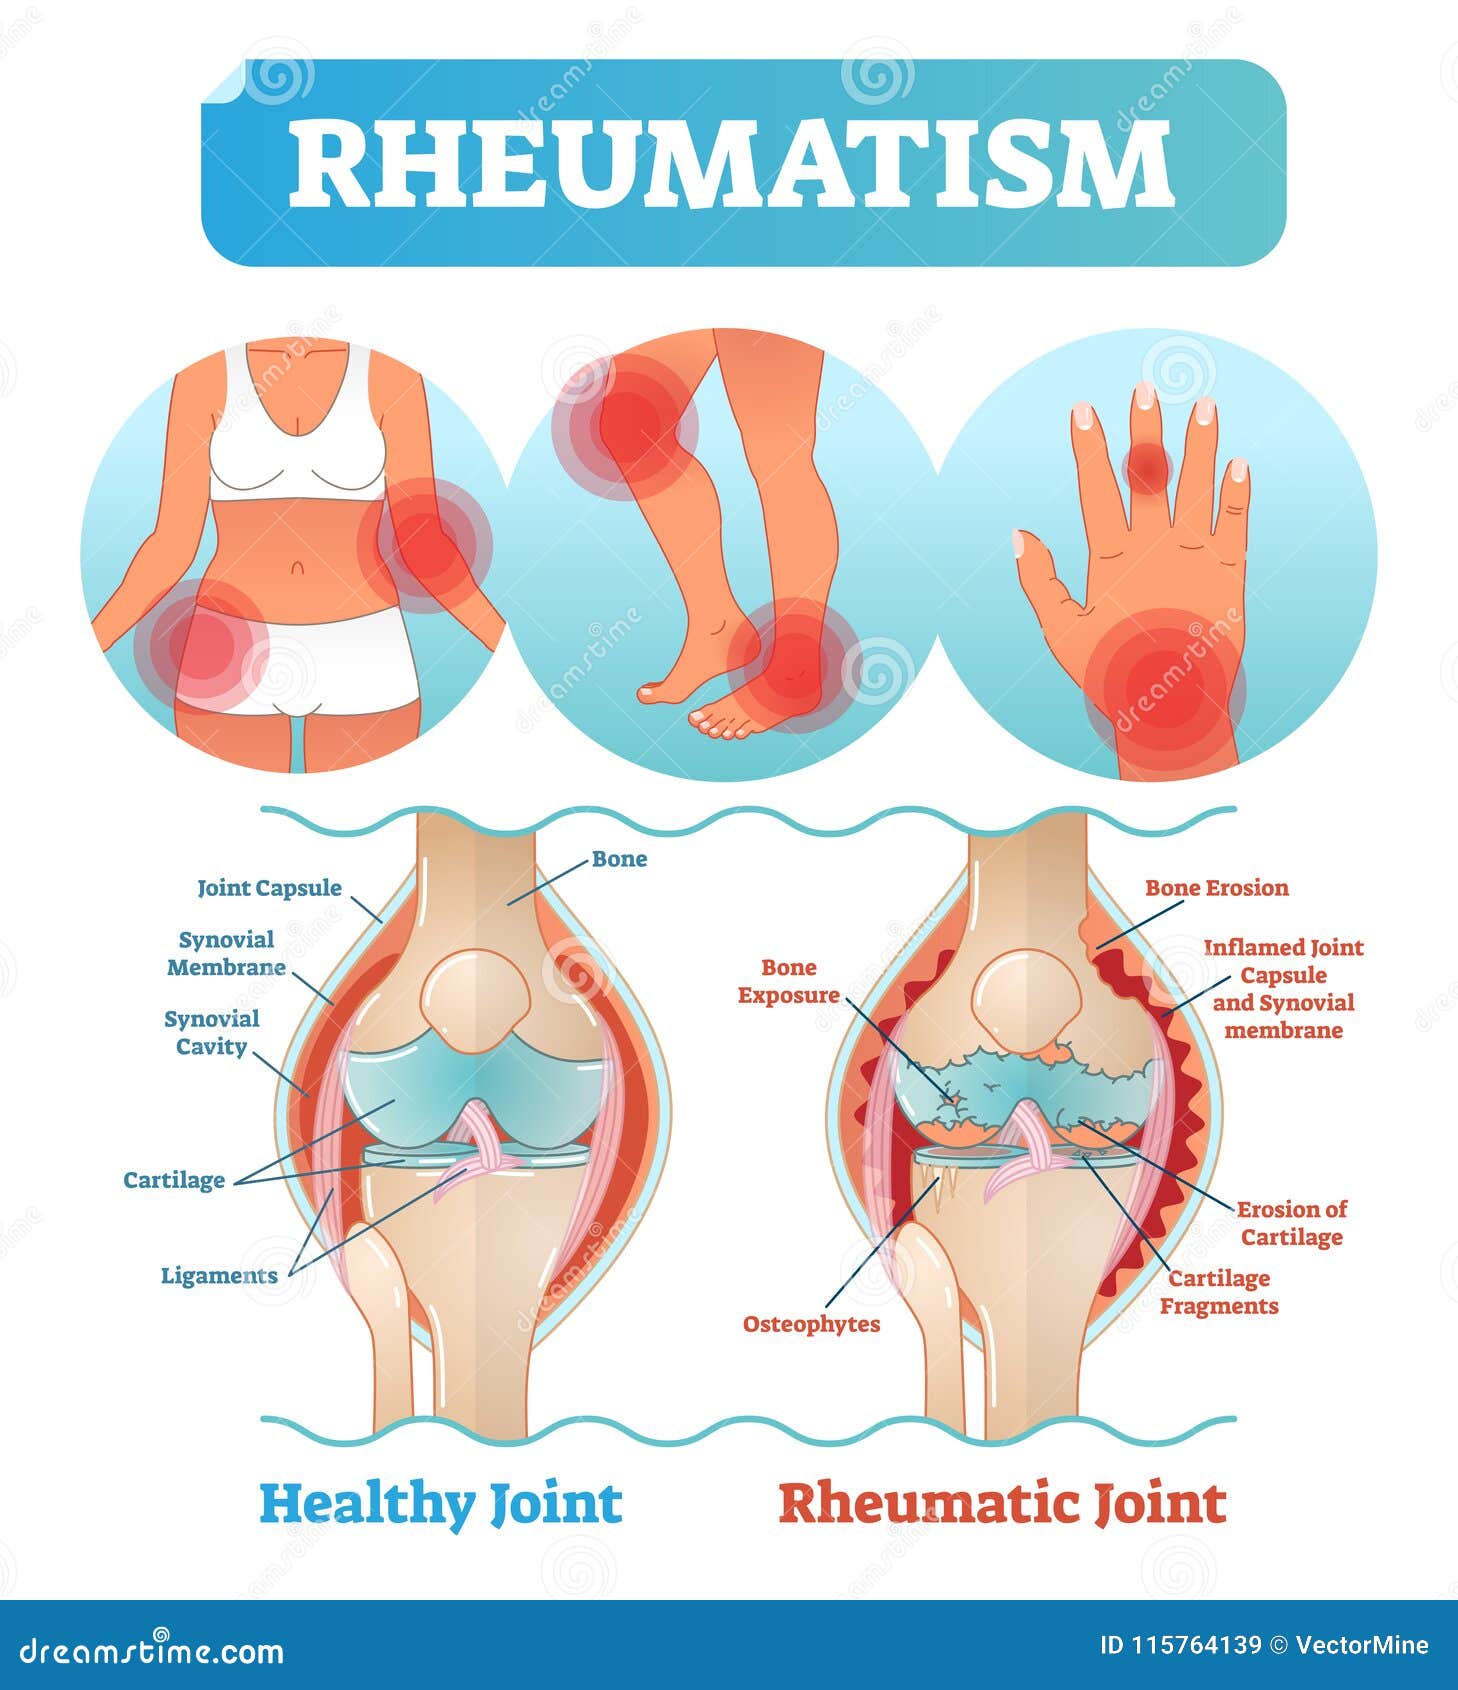 Rheumatism Medical Health Care Vector Illustration Poster